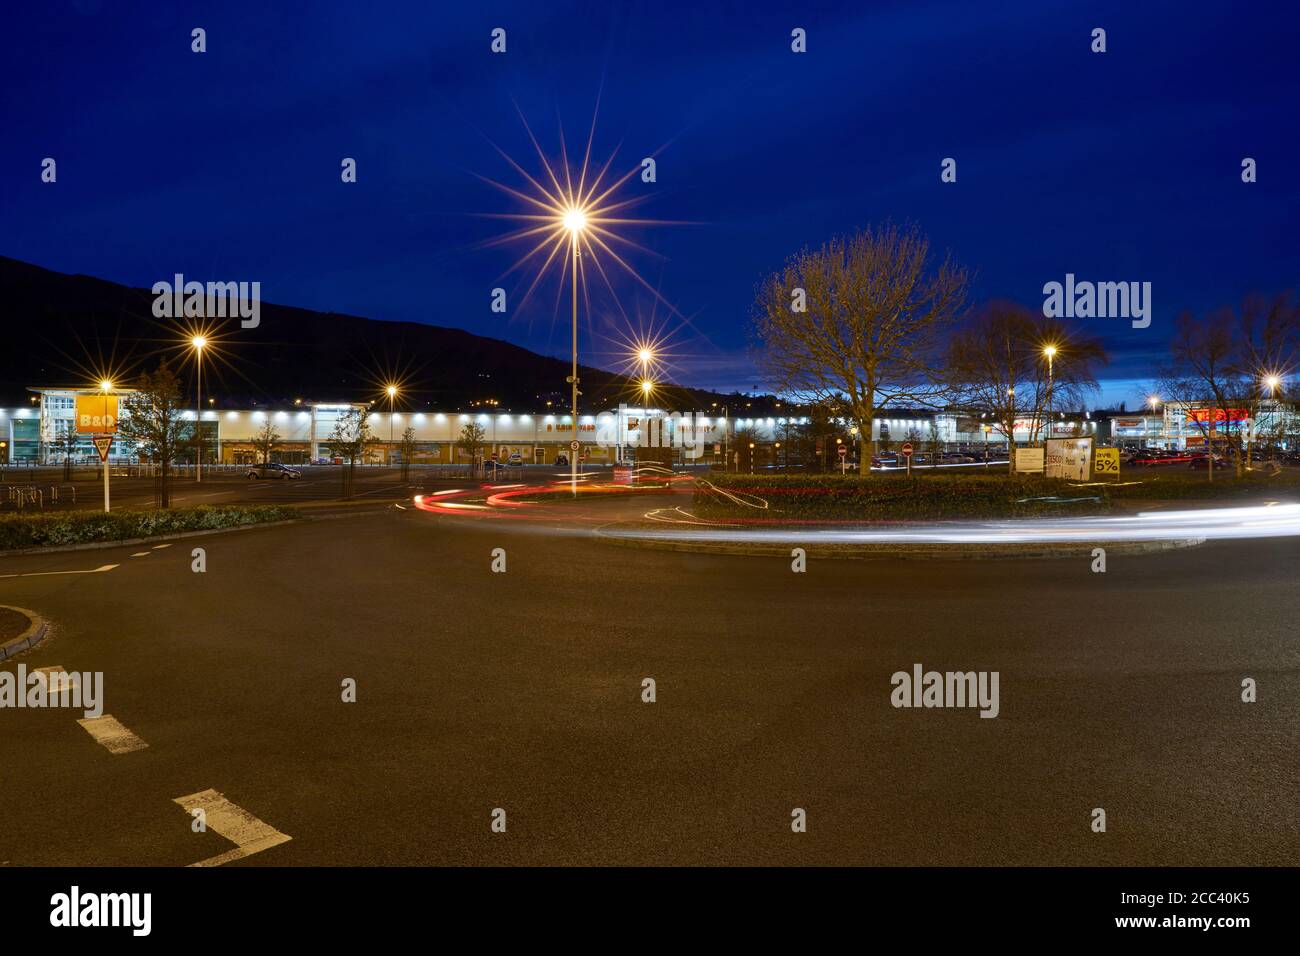 Tesco car park. Abbey Retail Park, Belfast, Belfast, Ireland. Architect: N/A, 2019. Stock Photo